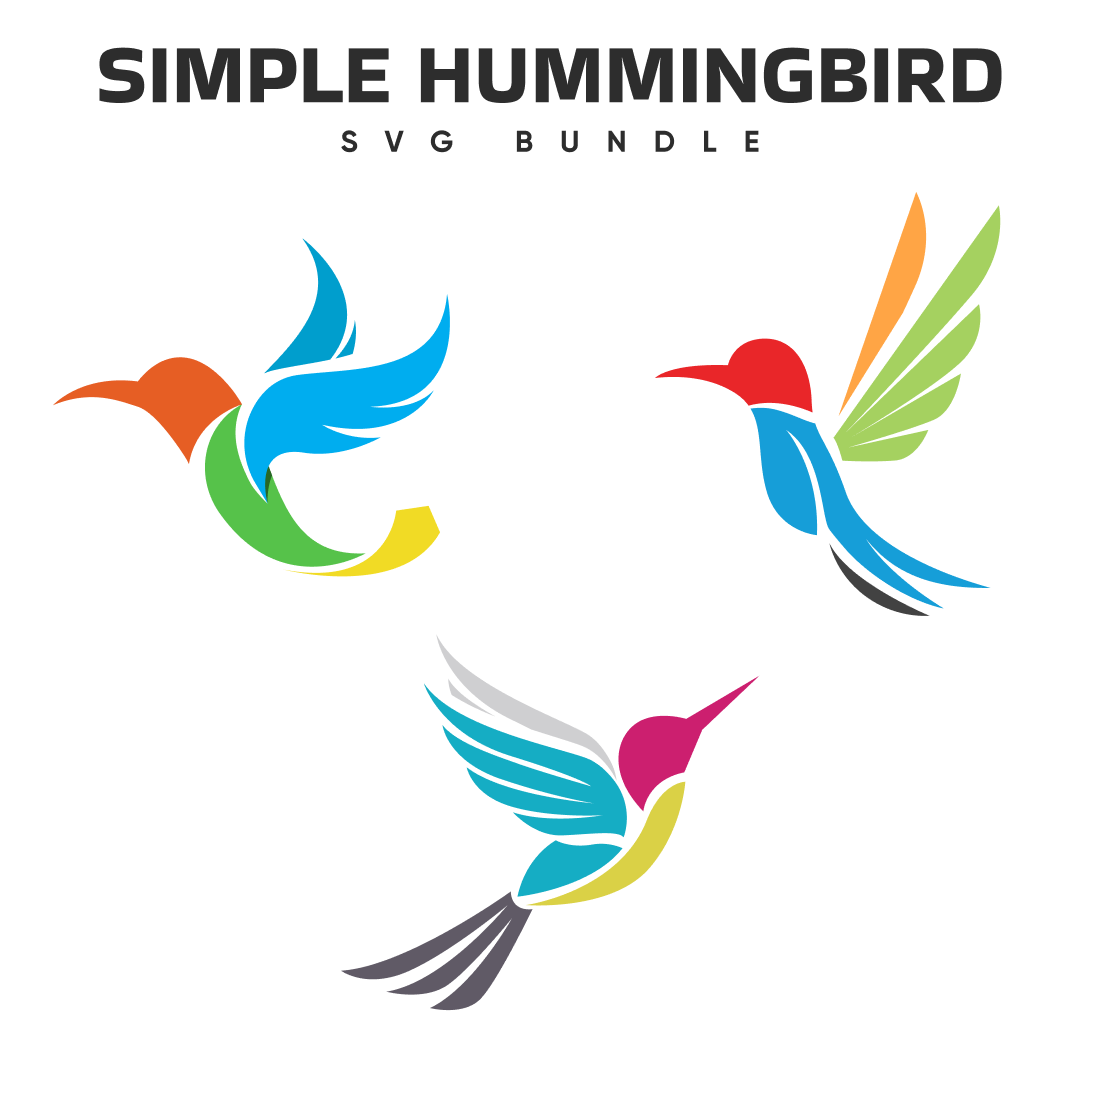 The simple hummingbird svg bundle.